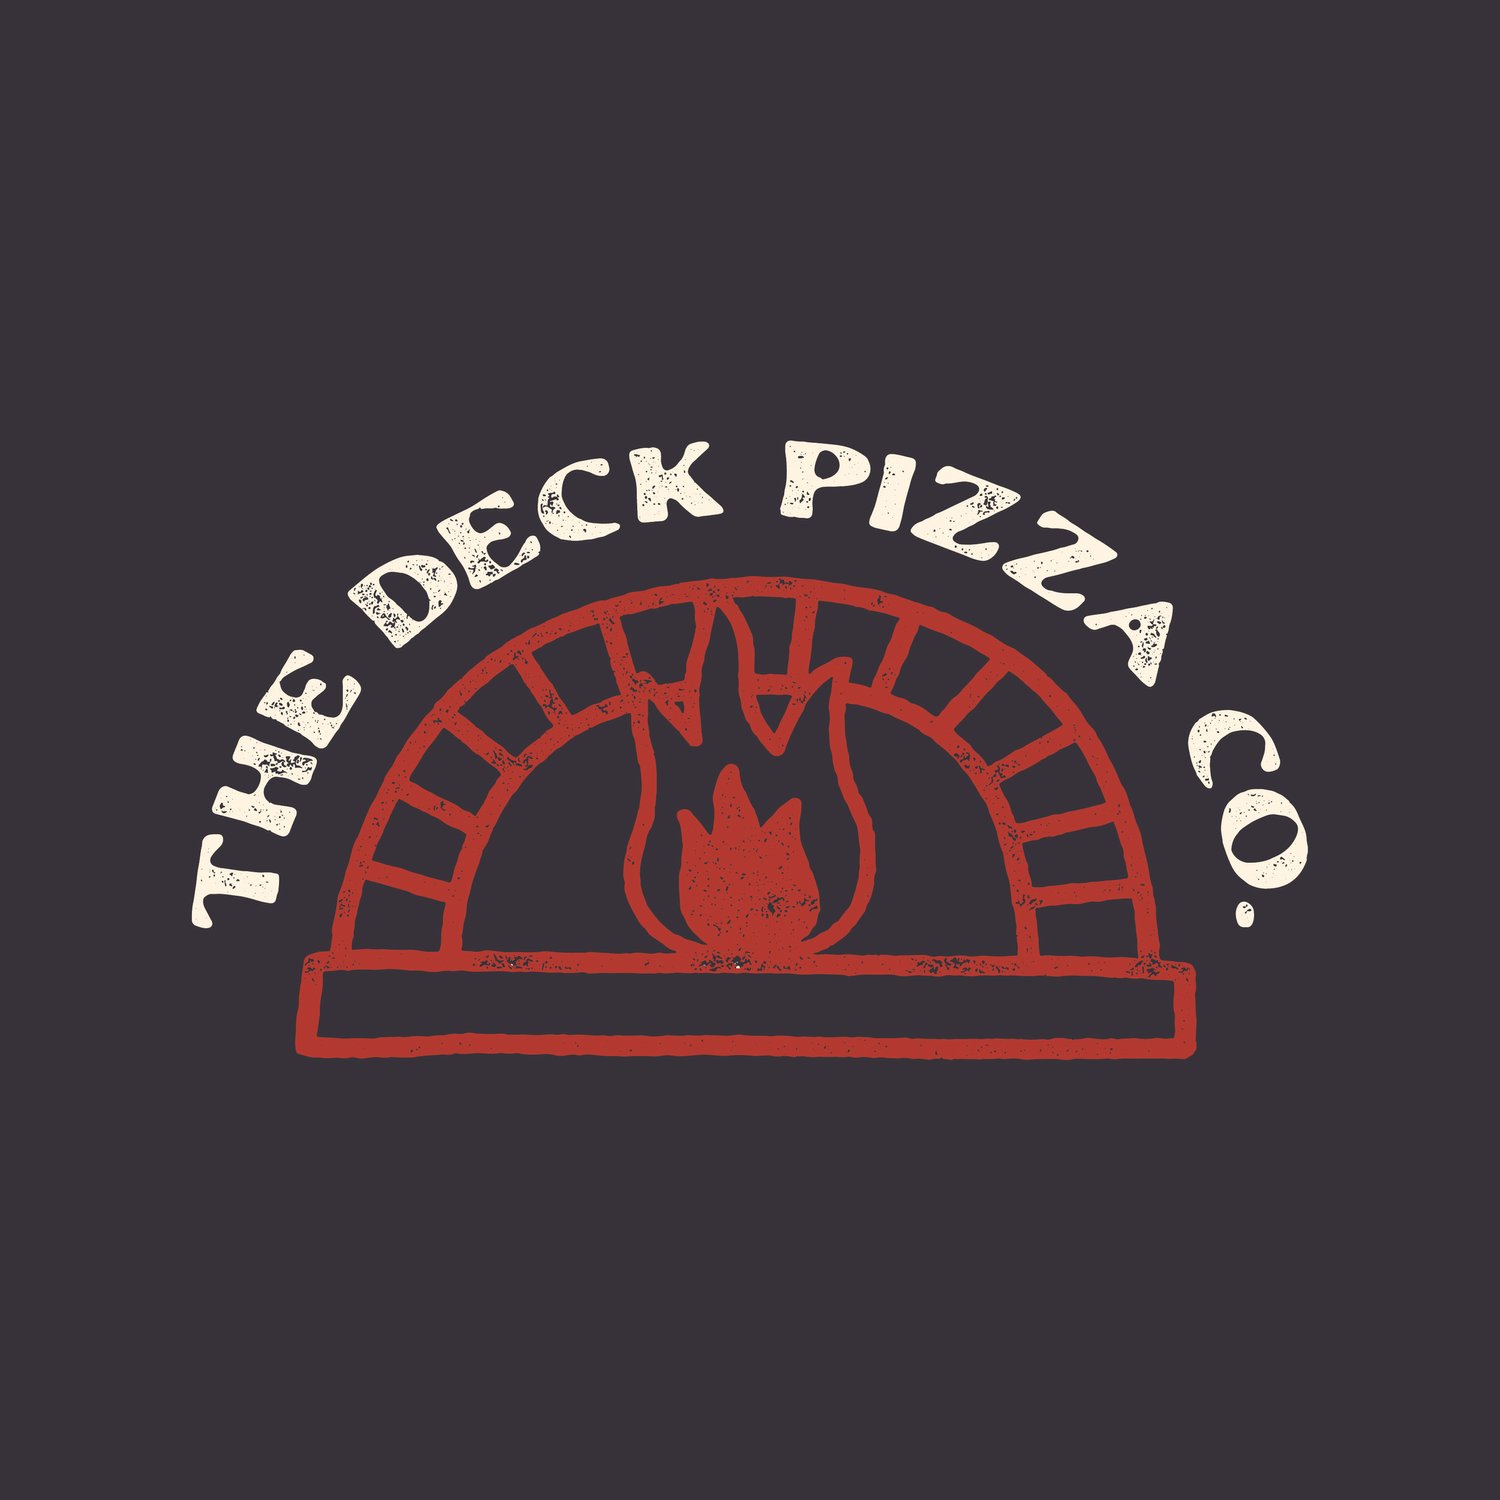 The Deck Pizza Company